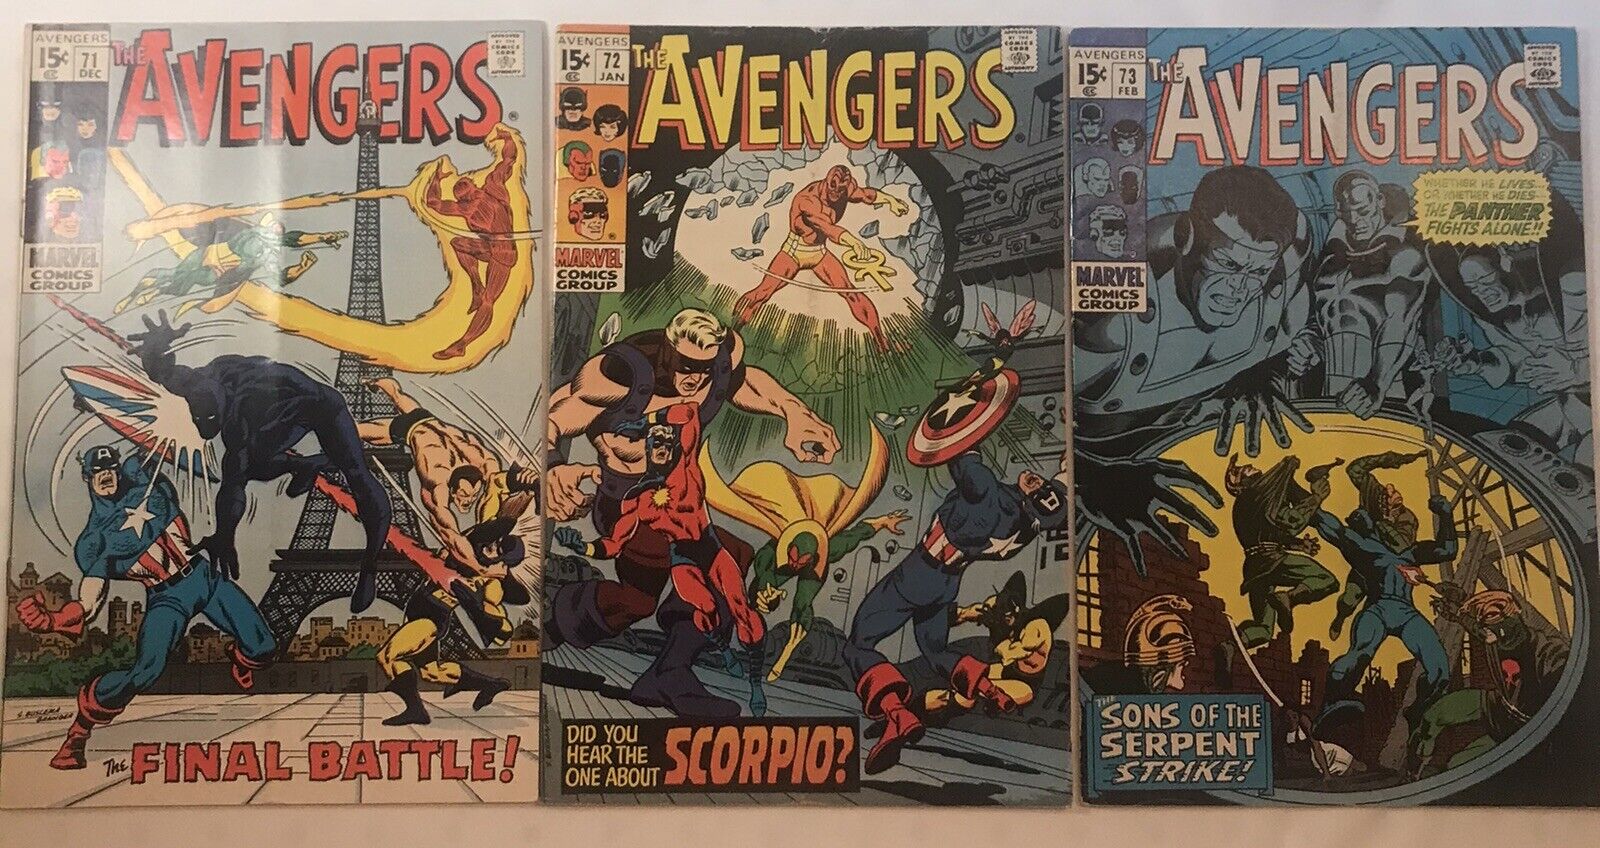 Lot Of 3 Avengers #71 #72 & #73 Silver Age Marvel Comic Books 1966-1968